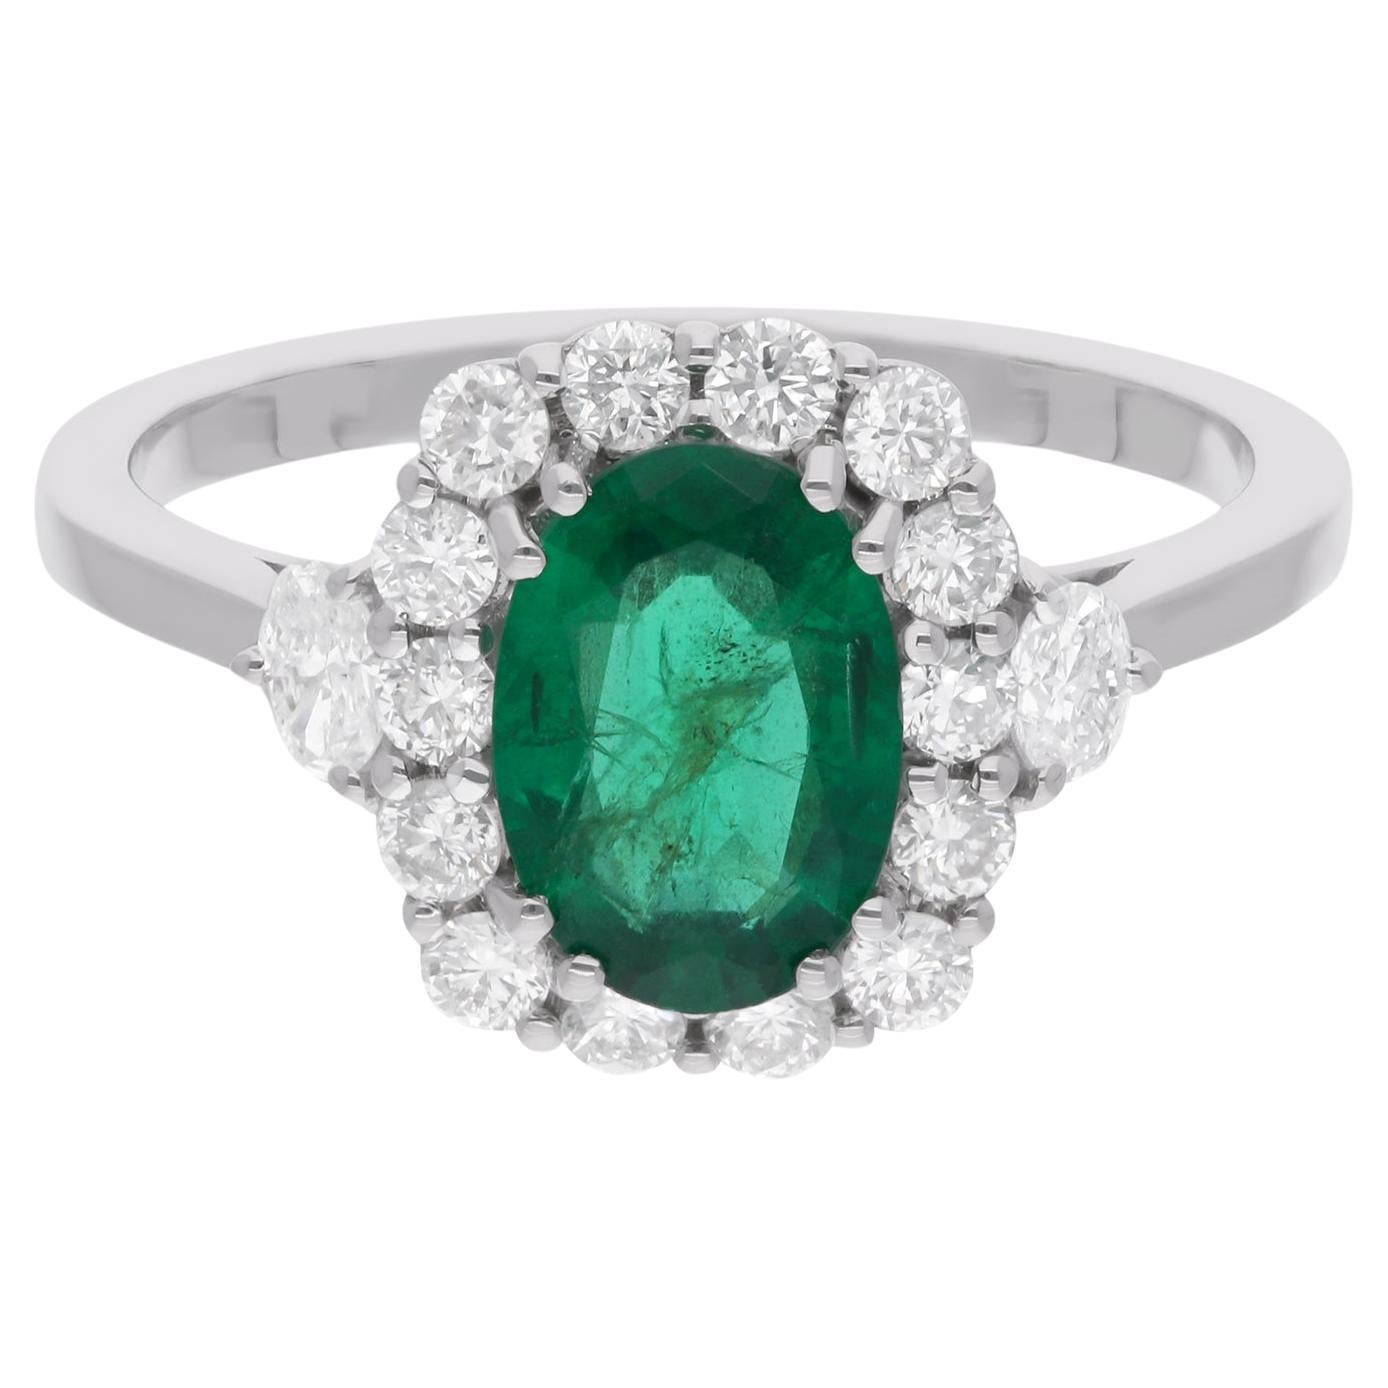 Oval Zambian Emerald Cocktail Ring Diamond 18 Karat White Gold Handmade Jewelry